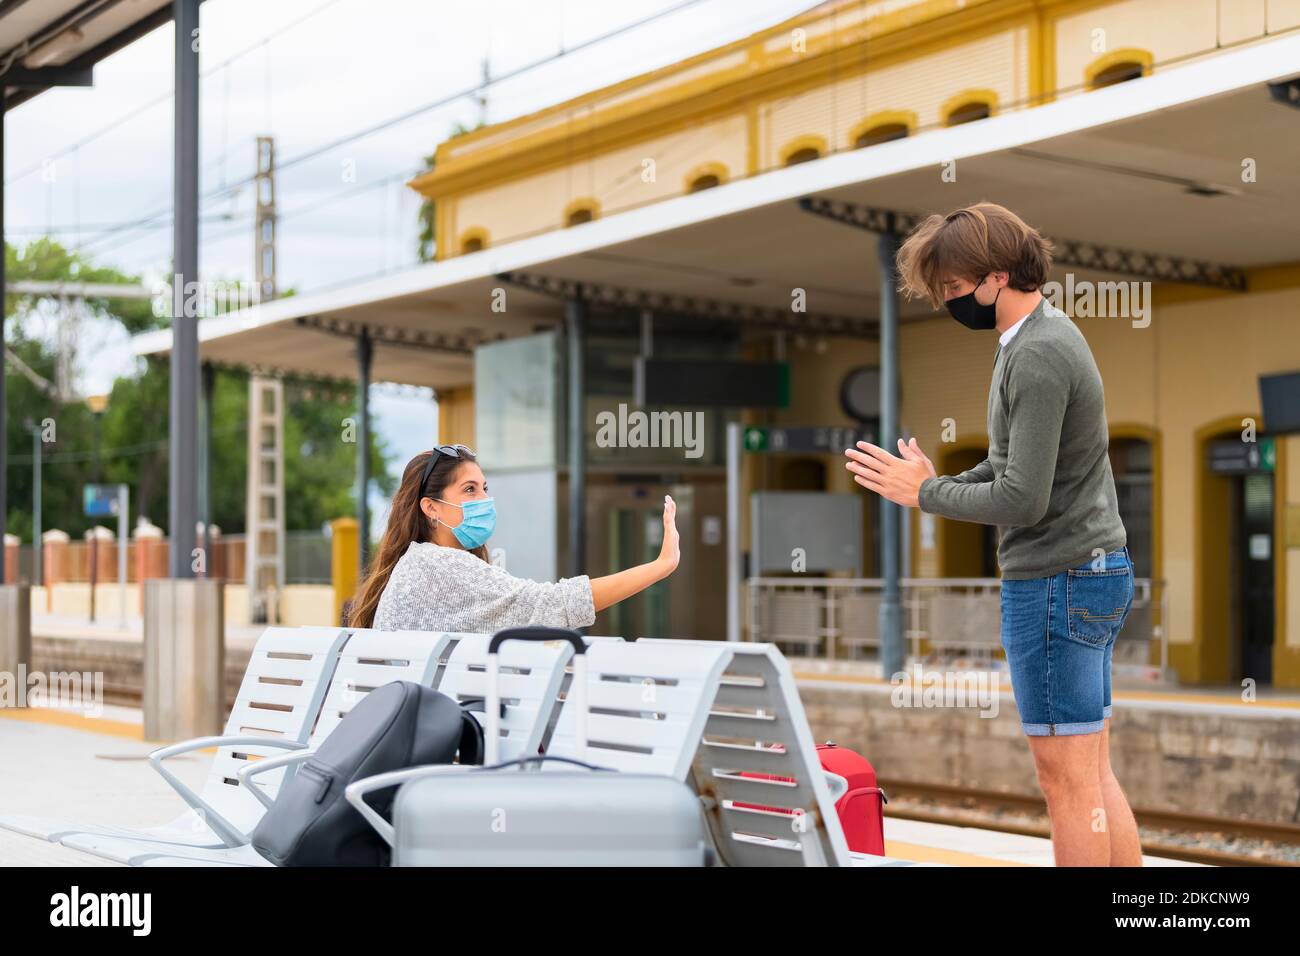 Man Talking With Woman On Railroad Station Platform Stock Photo